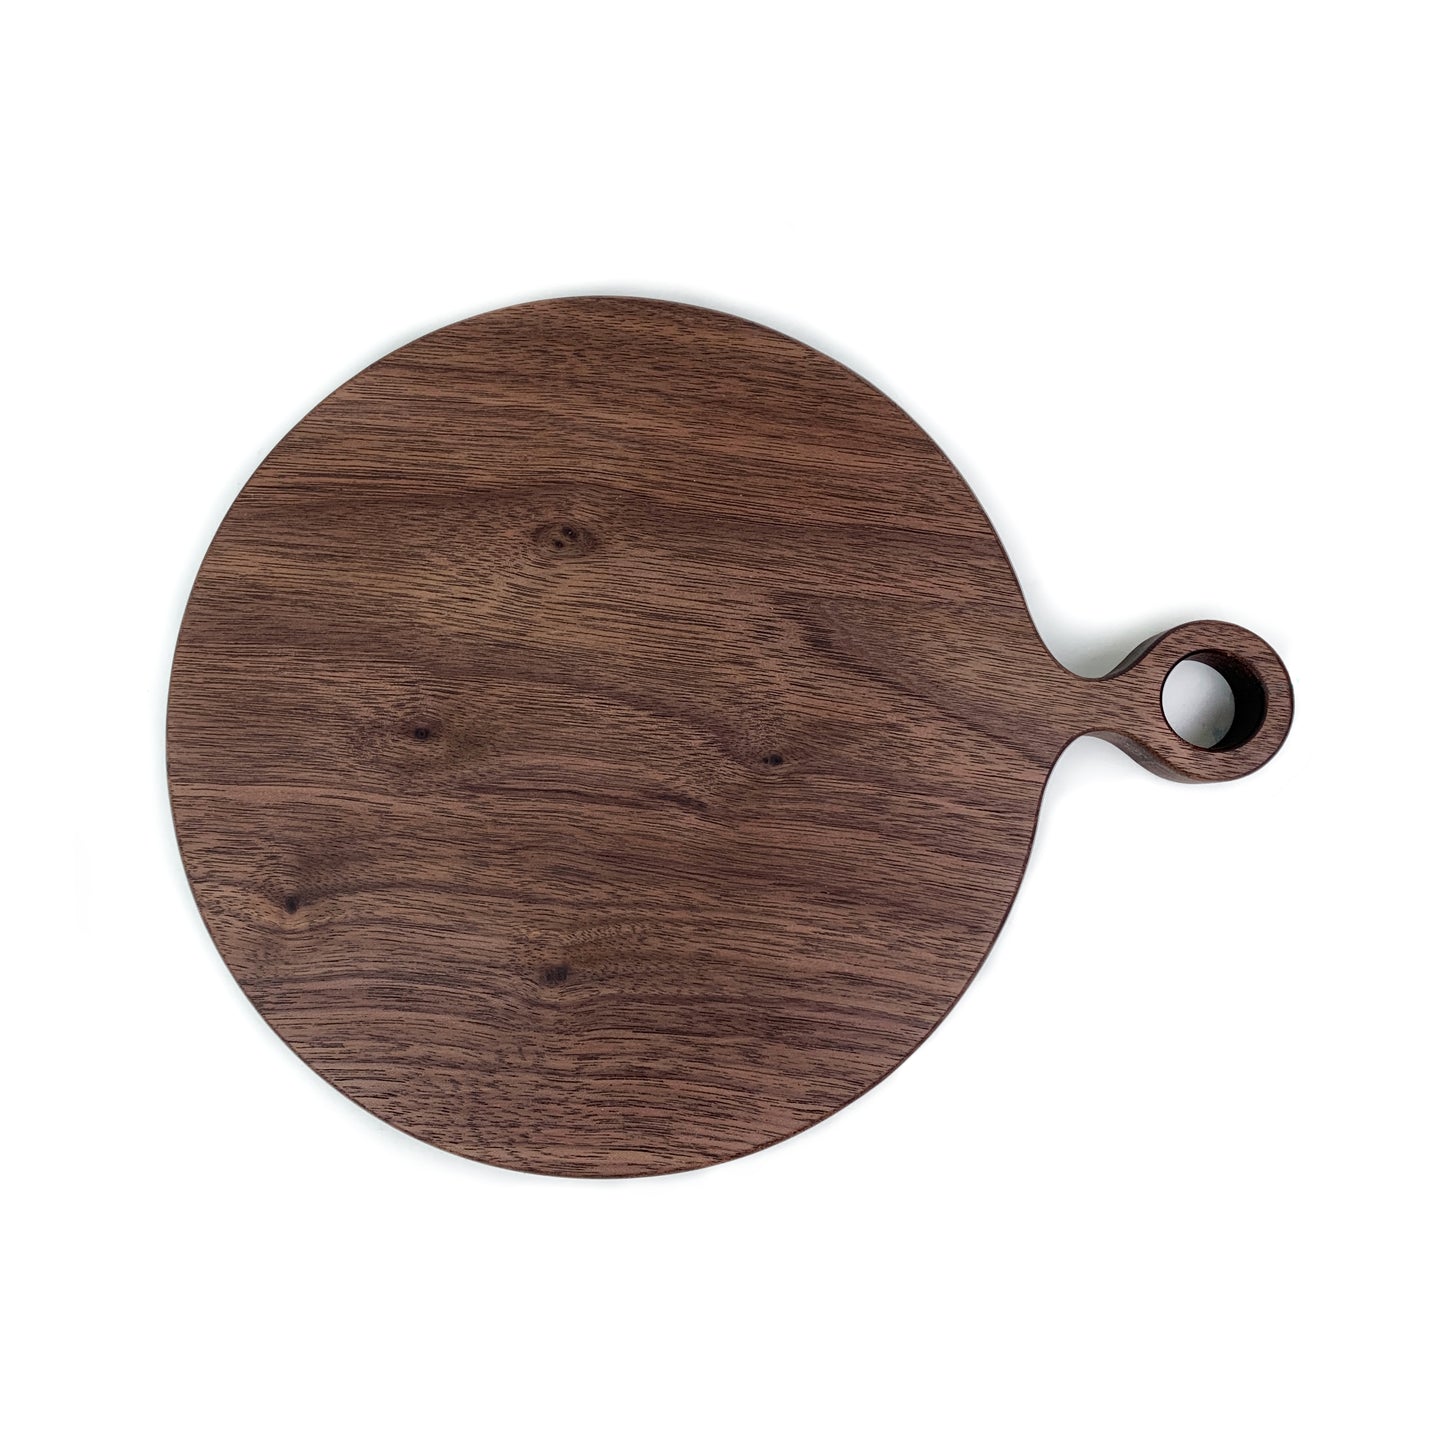 Solid Walnut Wood Round Cutting or Serving Board